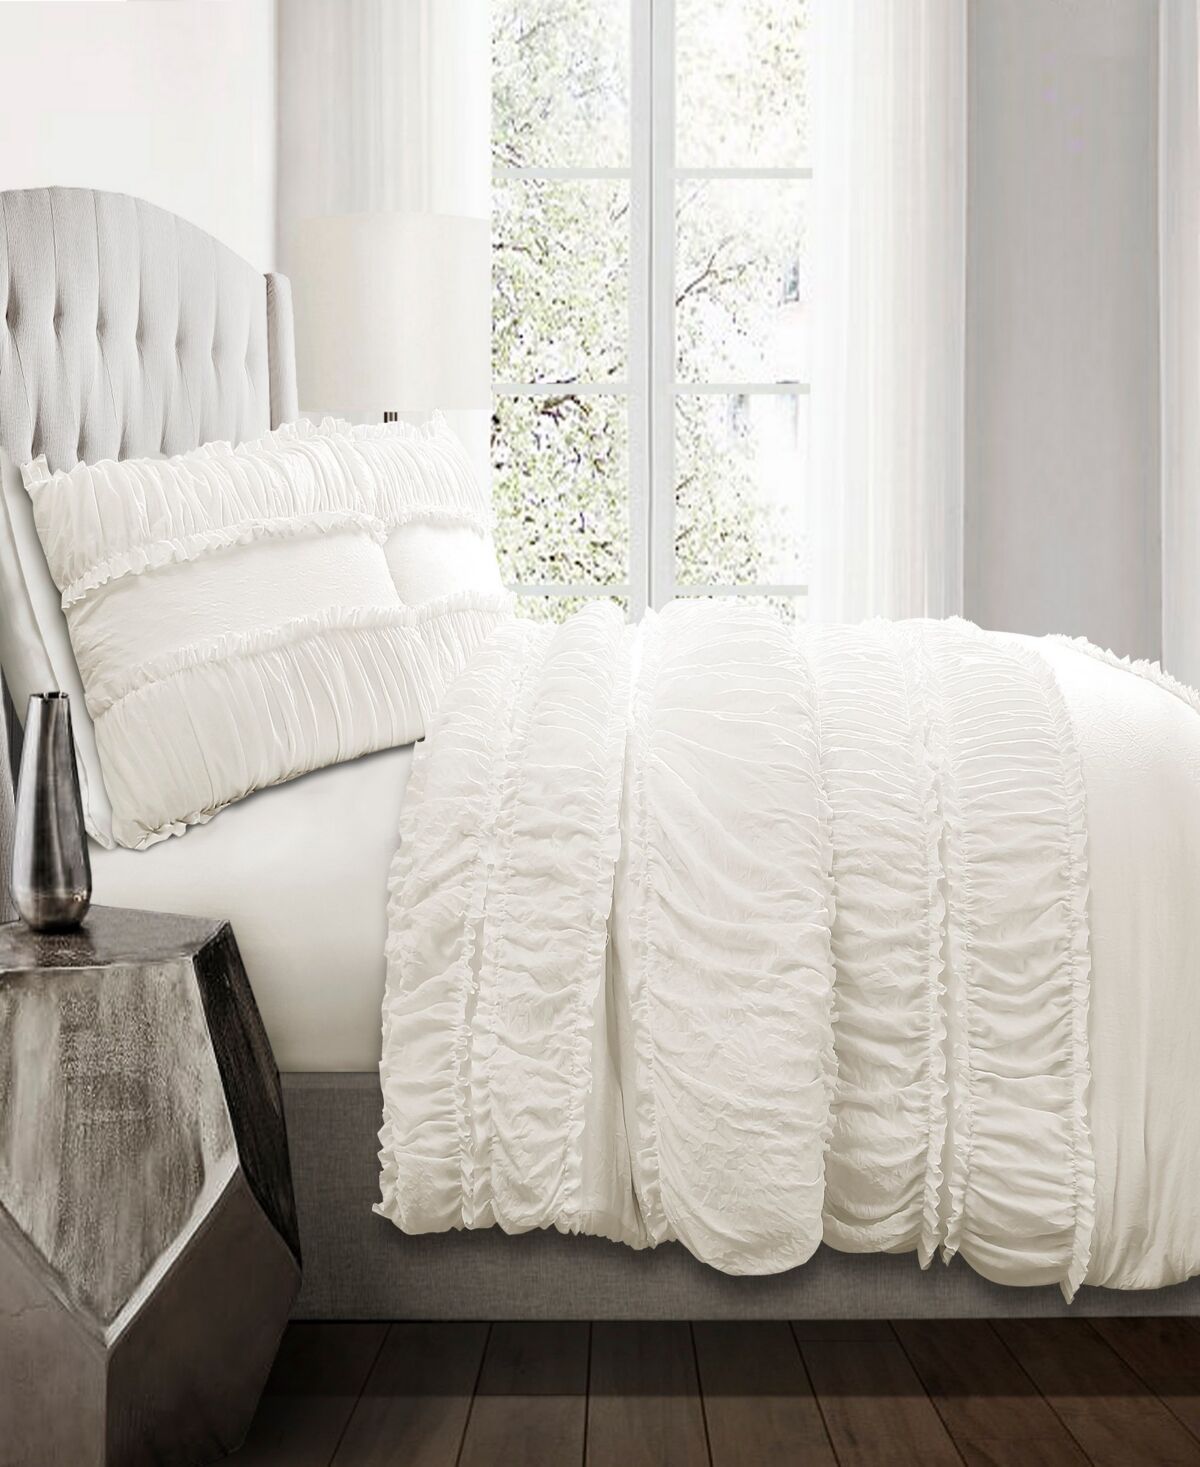 Lush Decor Nova Ruffle 3Pc Full/Queen Comforter Set - White